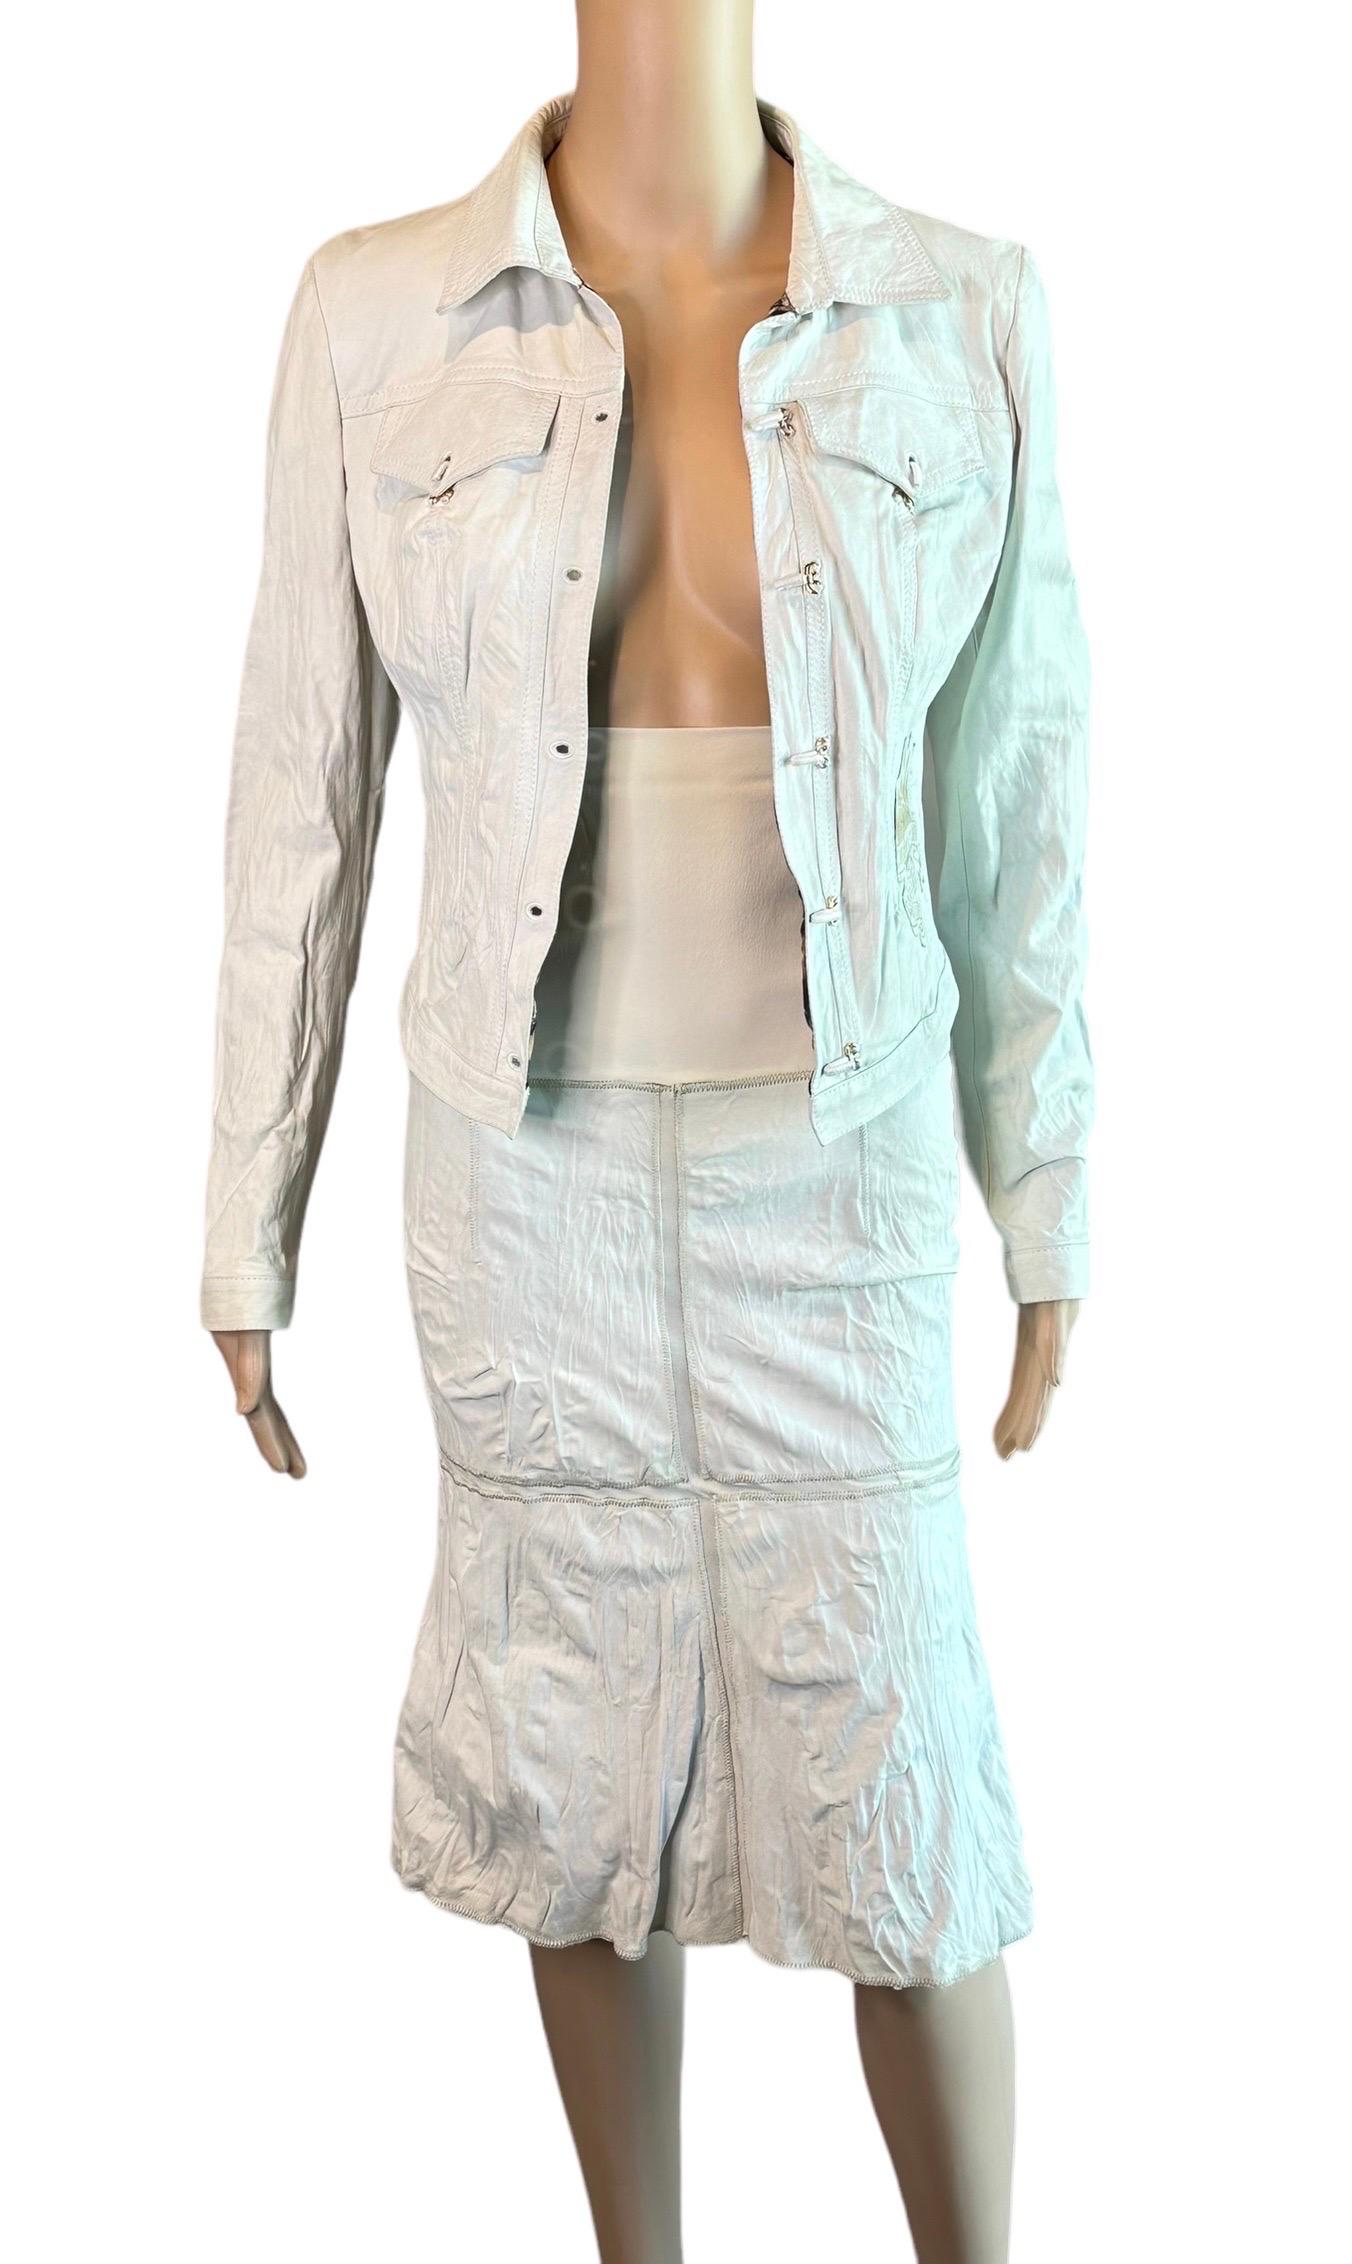 Roberto Cavalli S/S 2003 Unworn Leather Jacket Coat & Skirt 2 Piece Set Ensemble For Sale 2